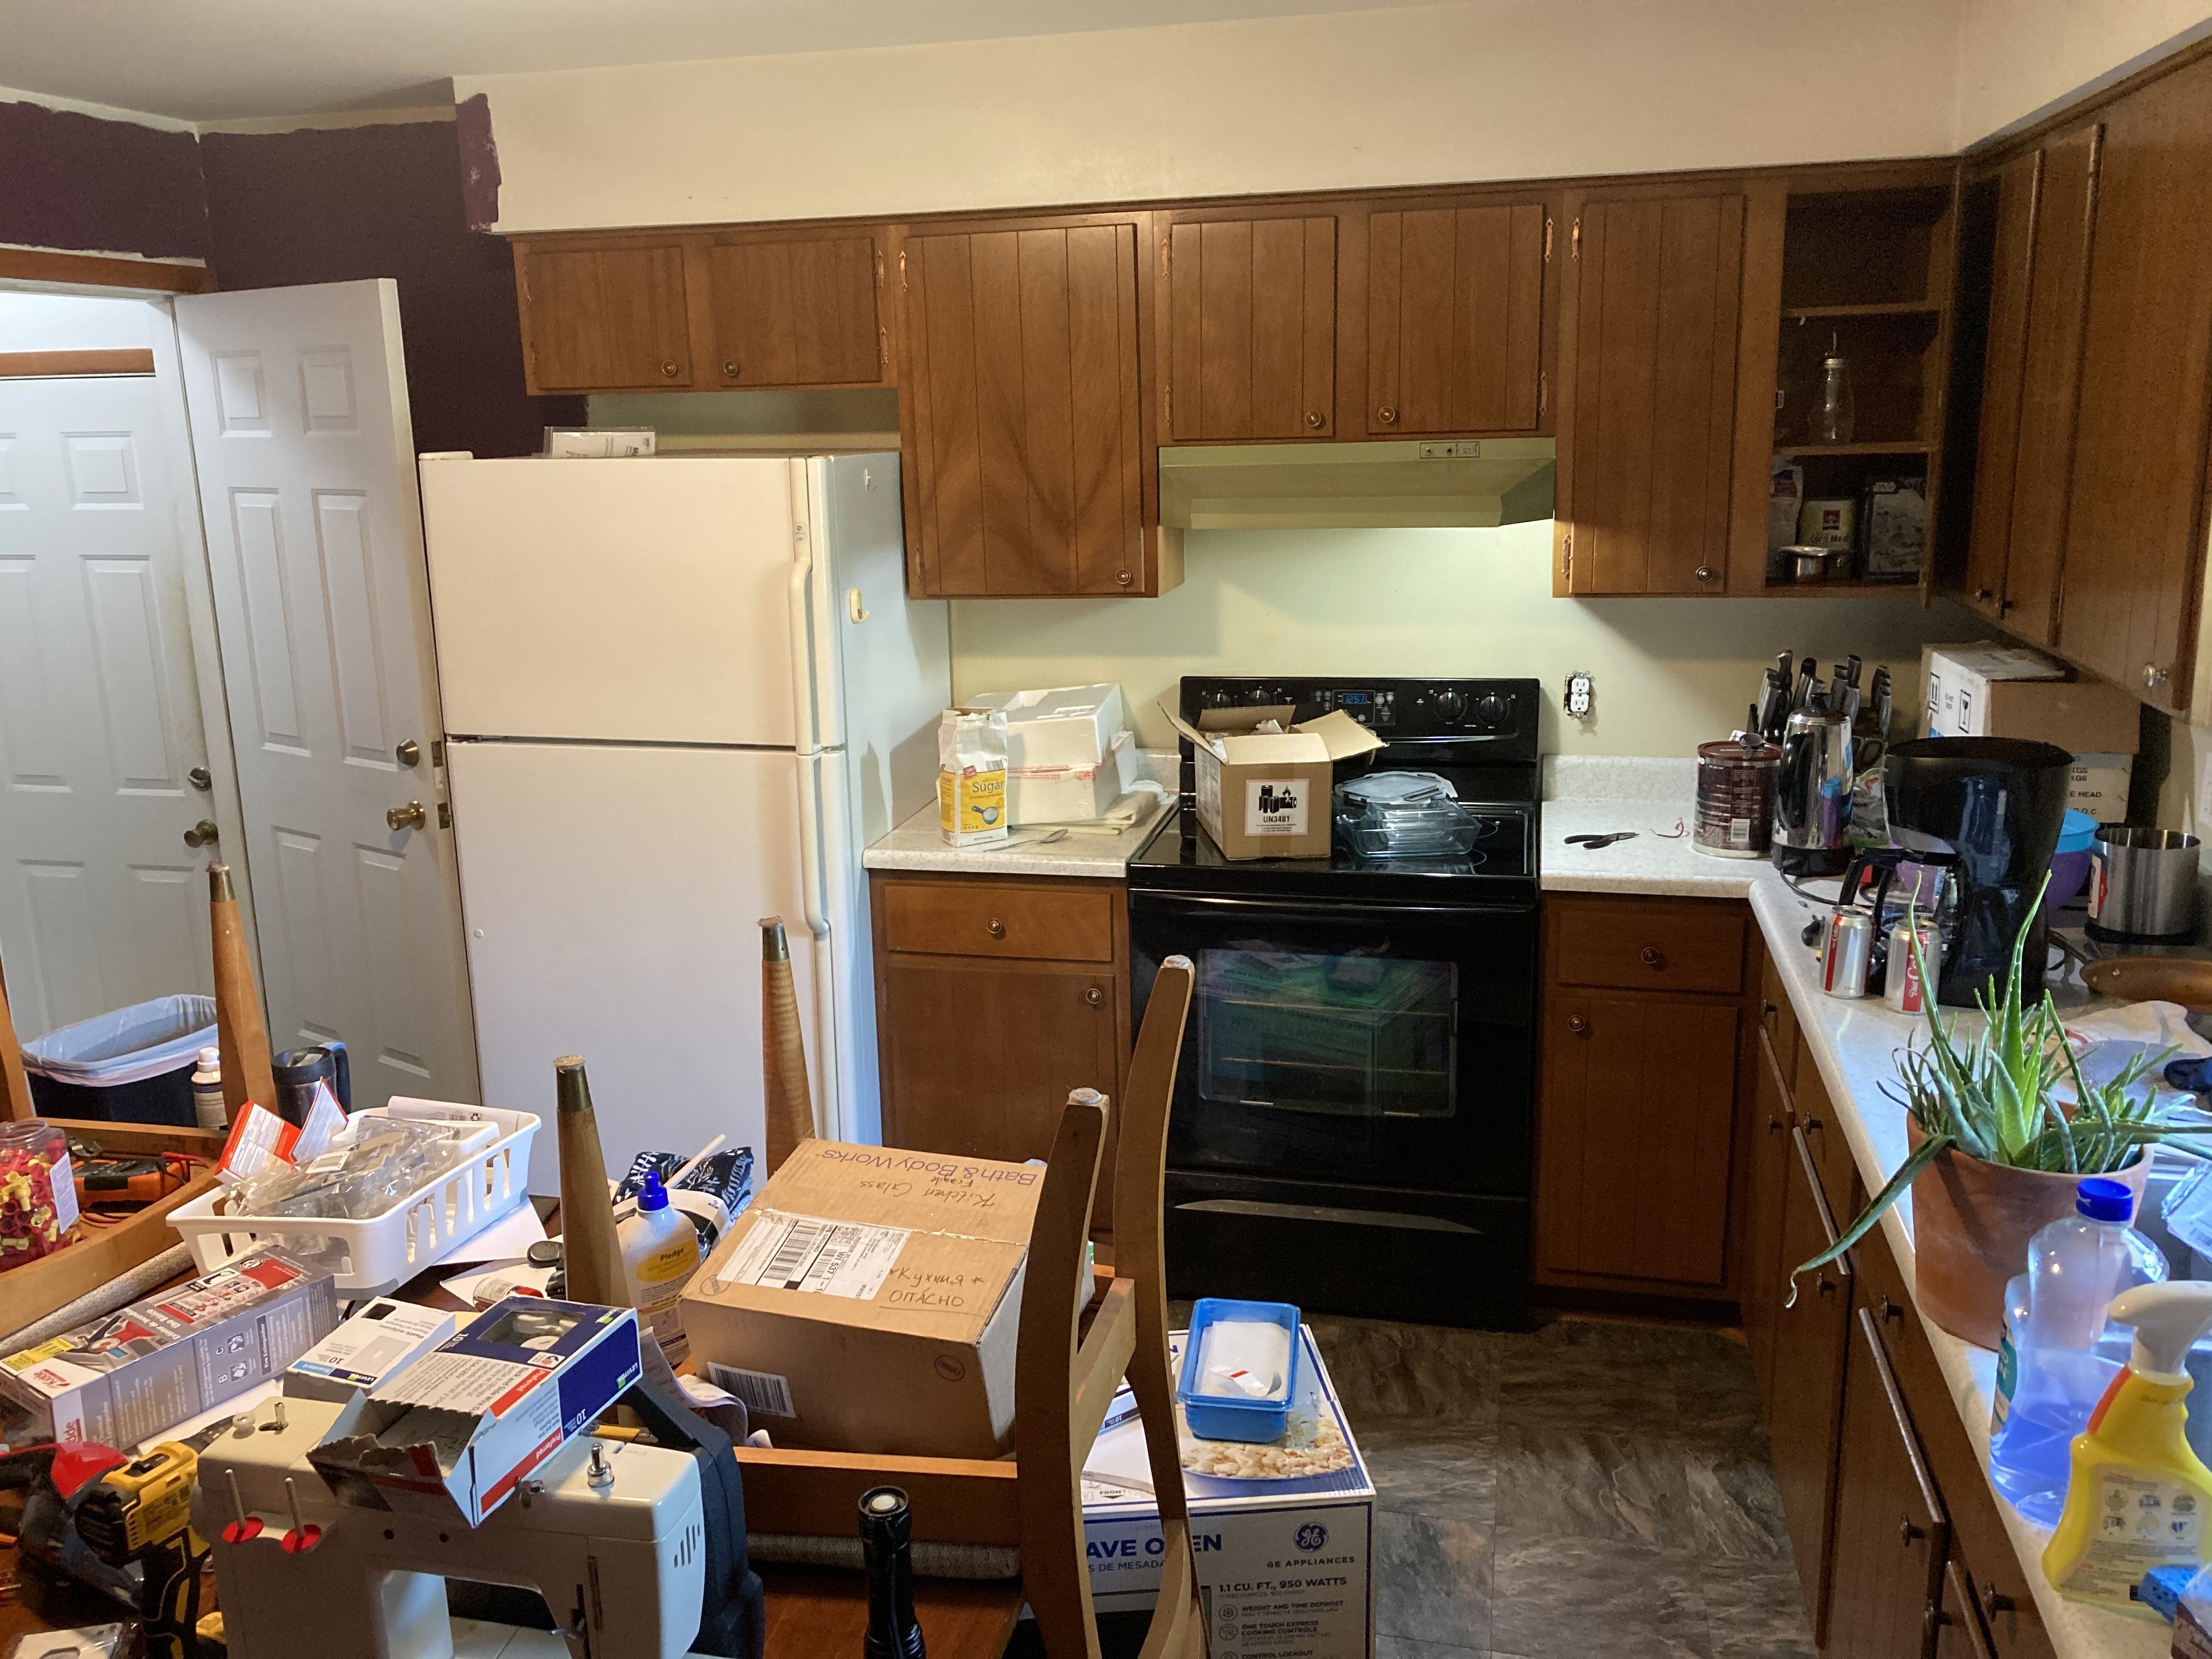 Pan view of kitchen